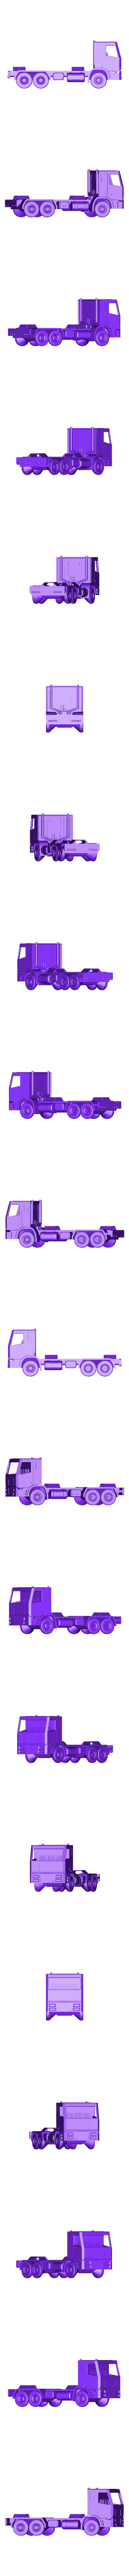 Truck_Base.stl Download free STL file Print-in-Place Box Truck Module • 3D printer template, budinavit